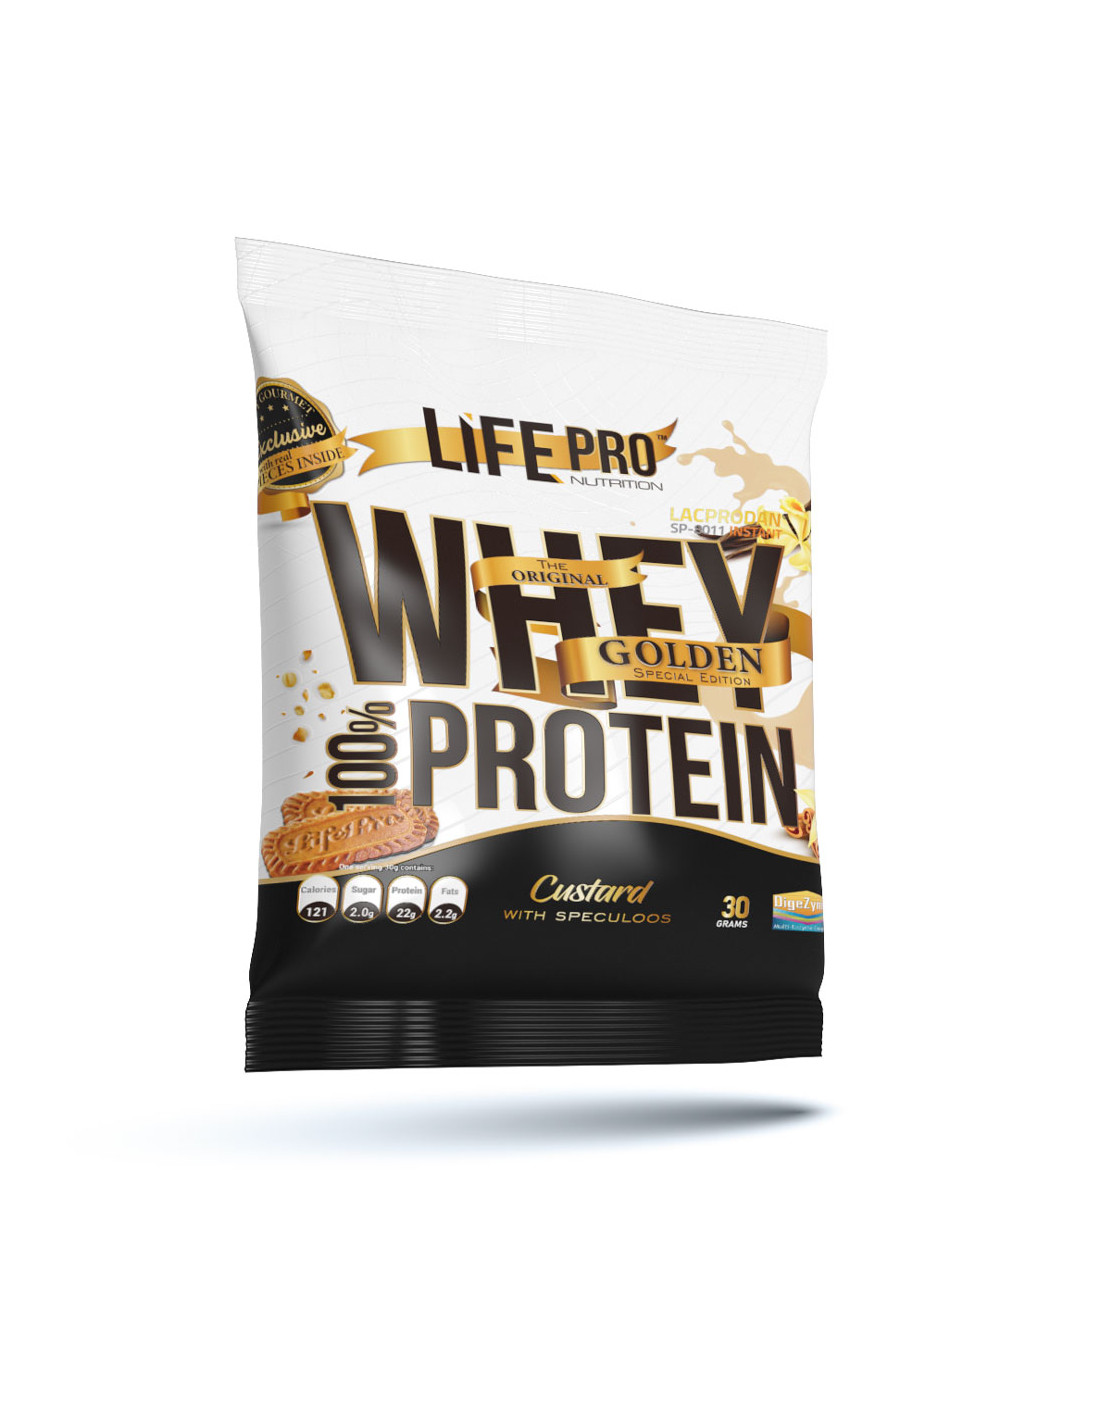 Proteína de suero Life Pro Whey Choco Monky 2kg Limited Edition